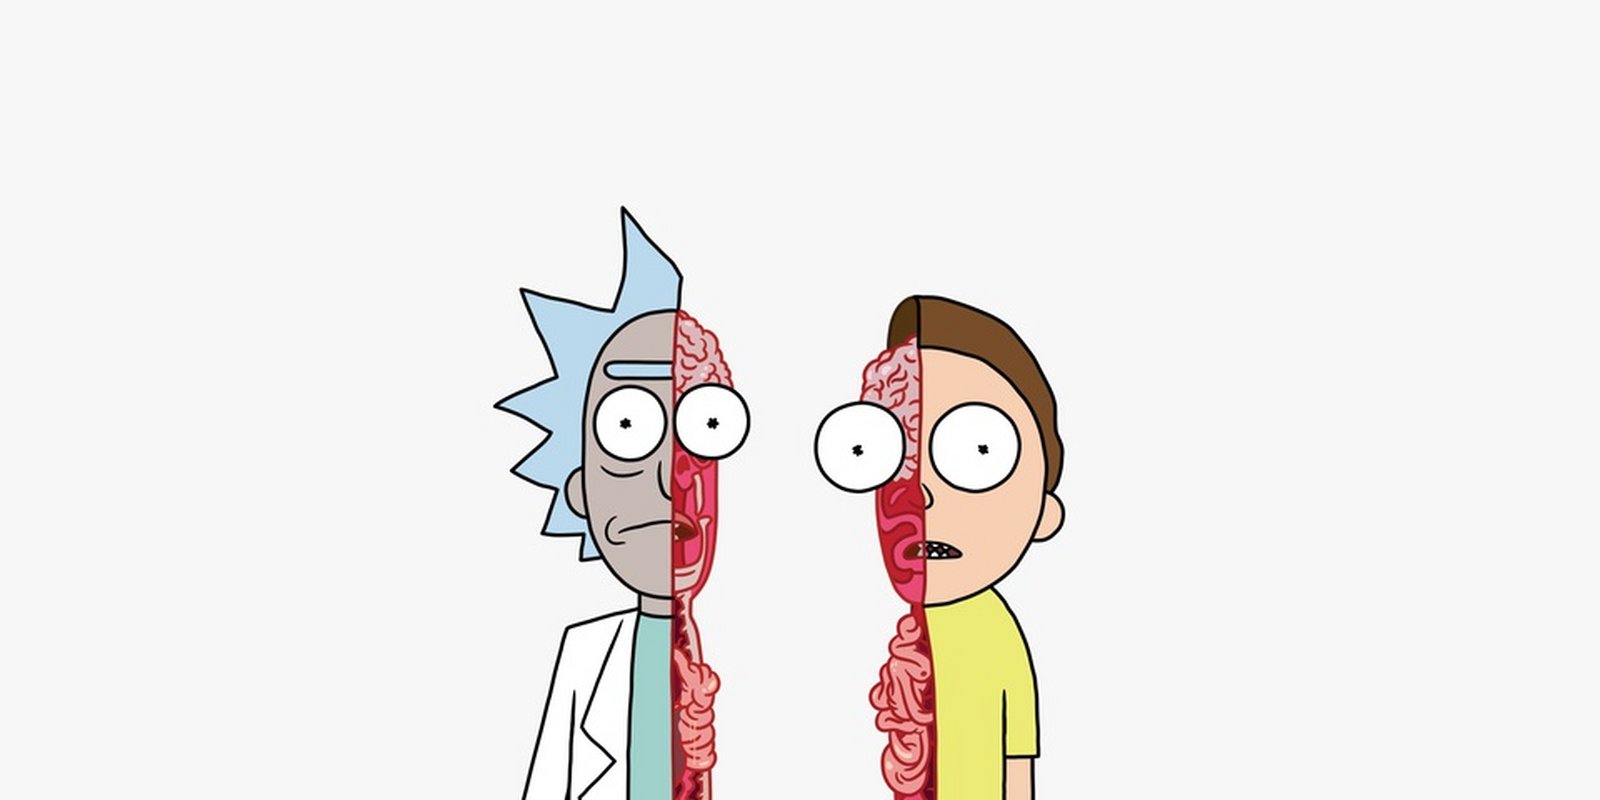 Rick and Morty - Staffel 4